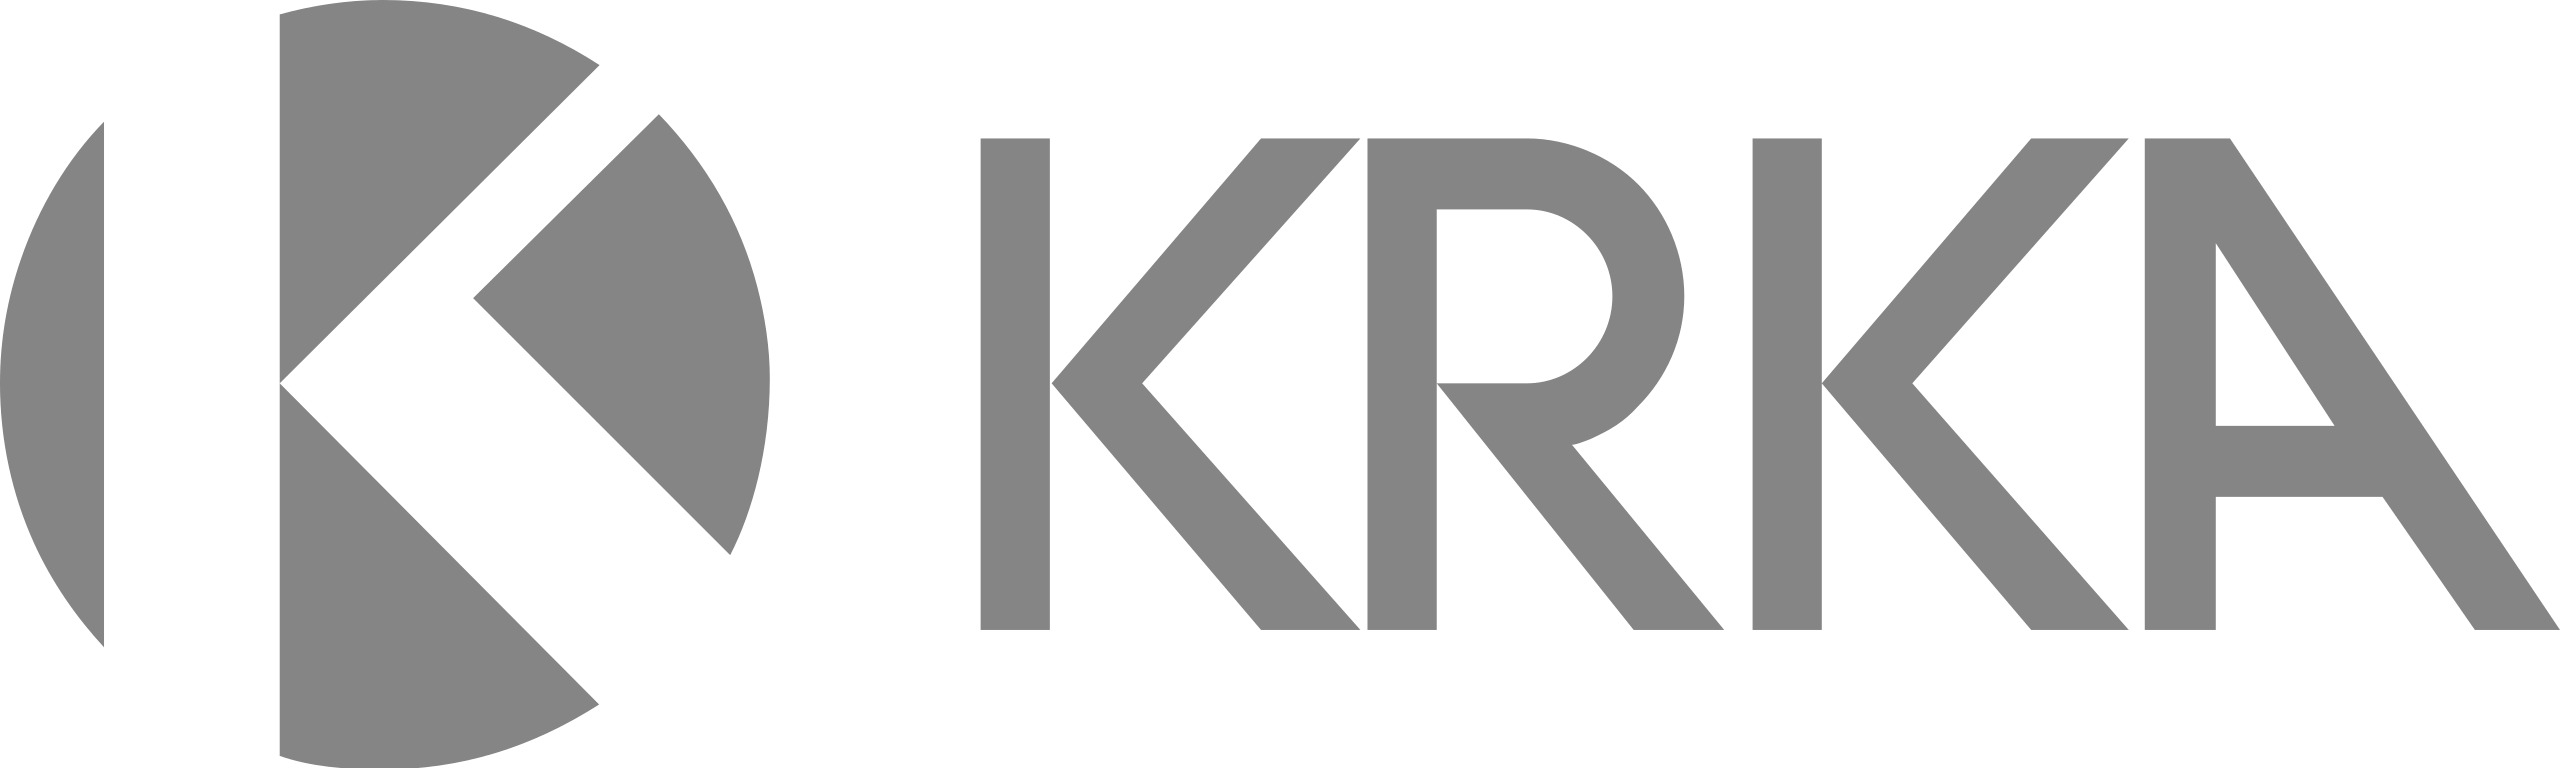 KRKA logo grey